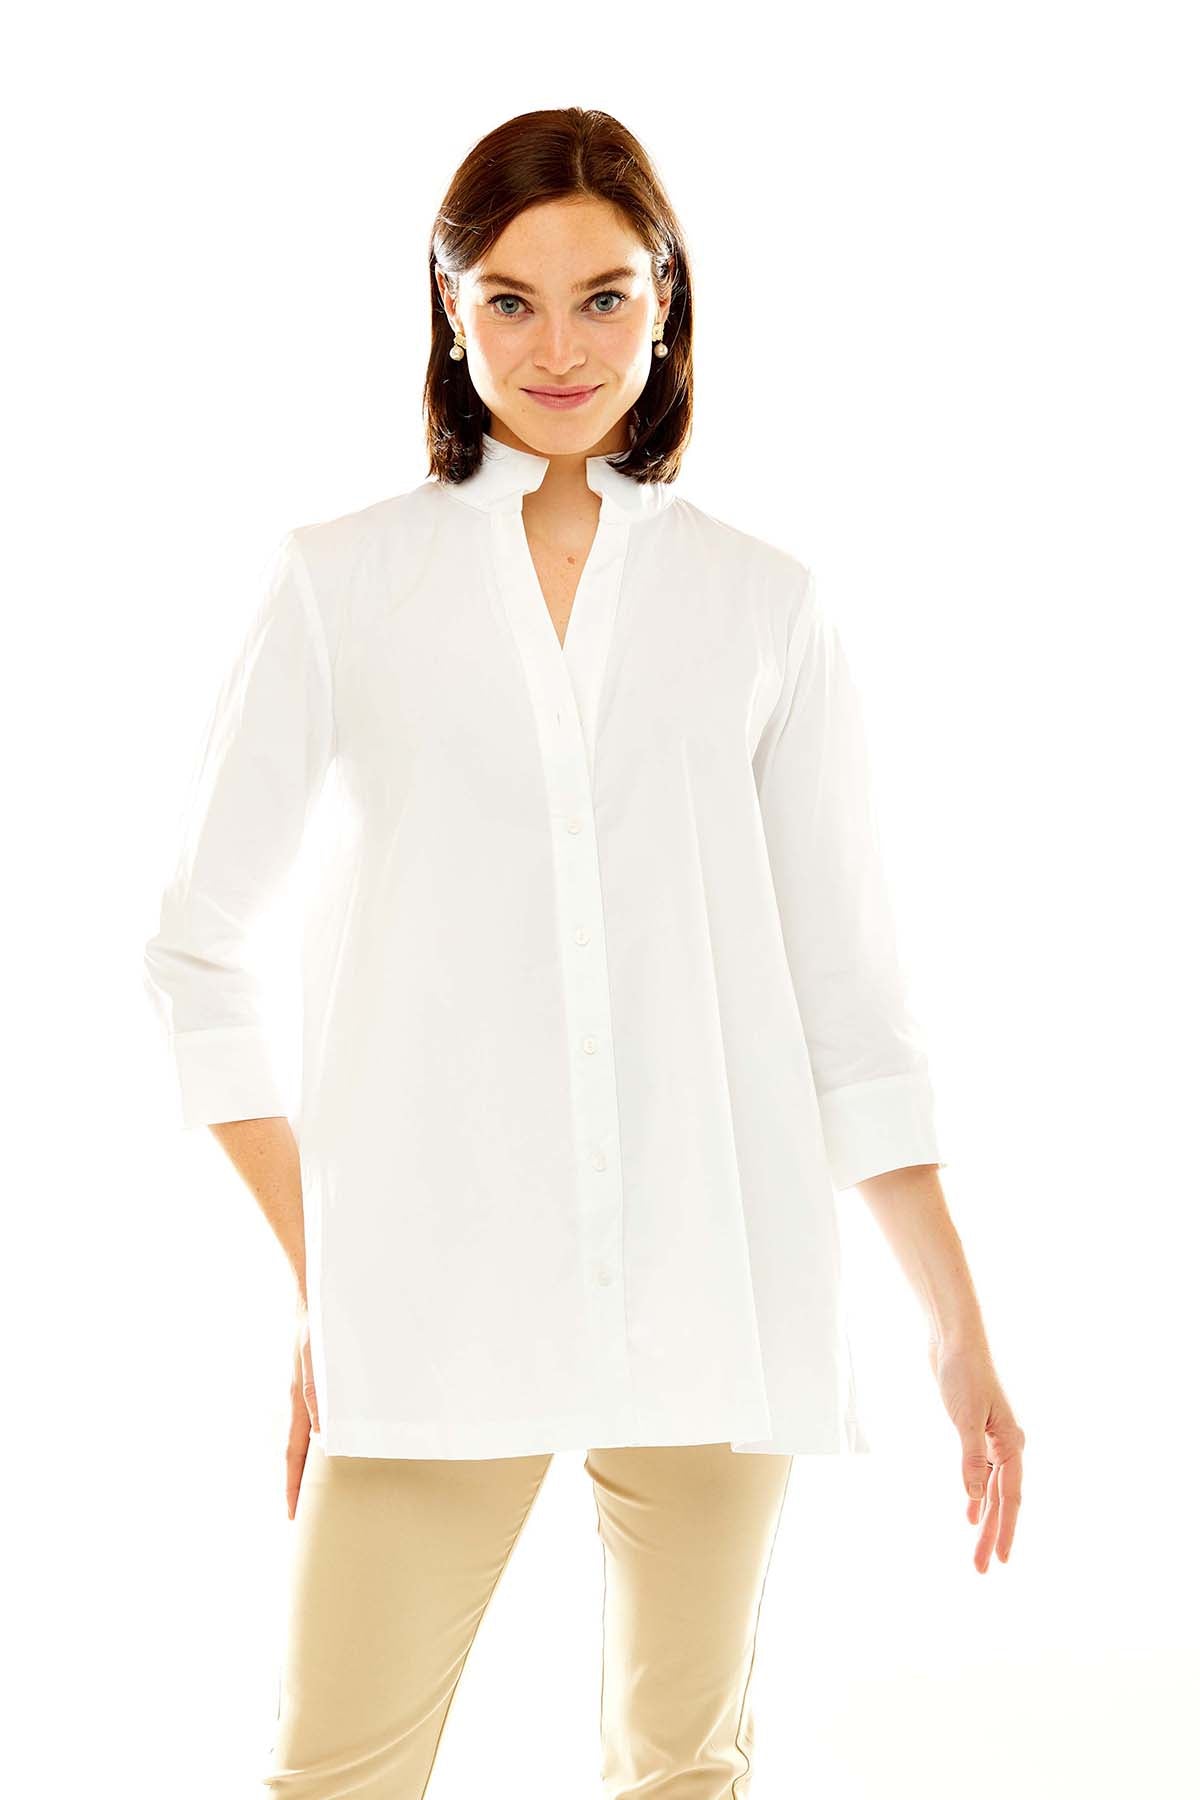 Woman in white tunic